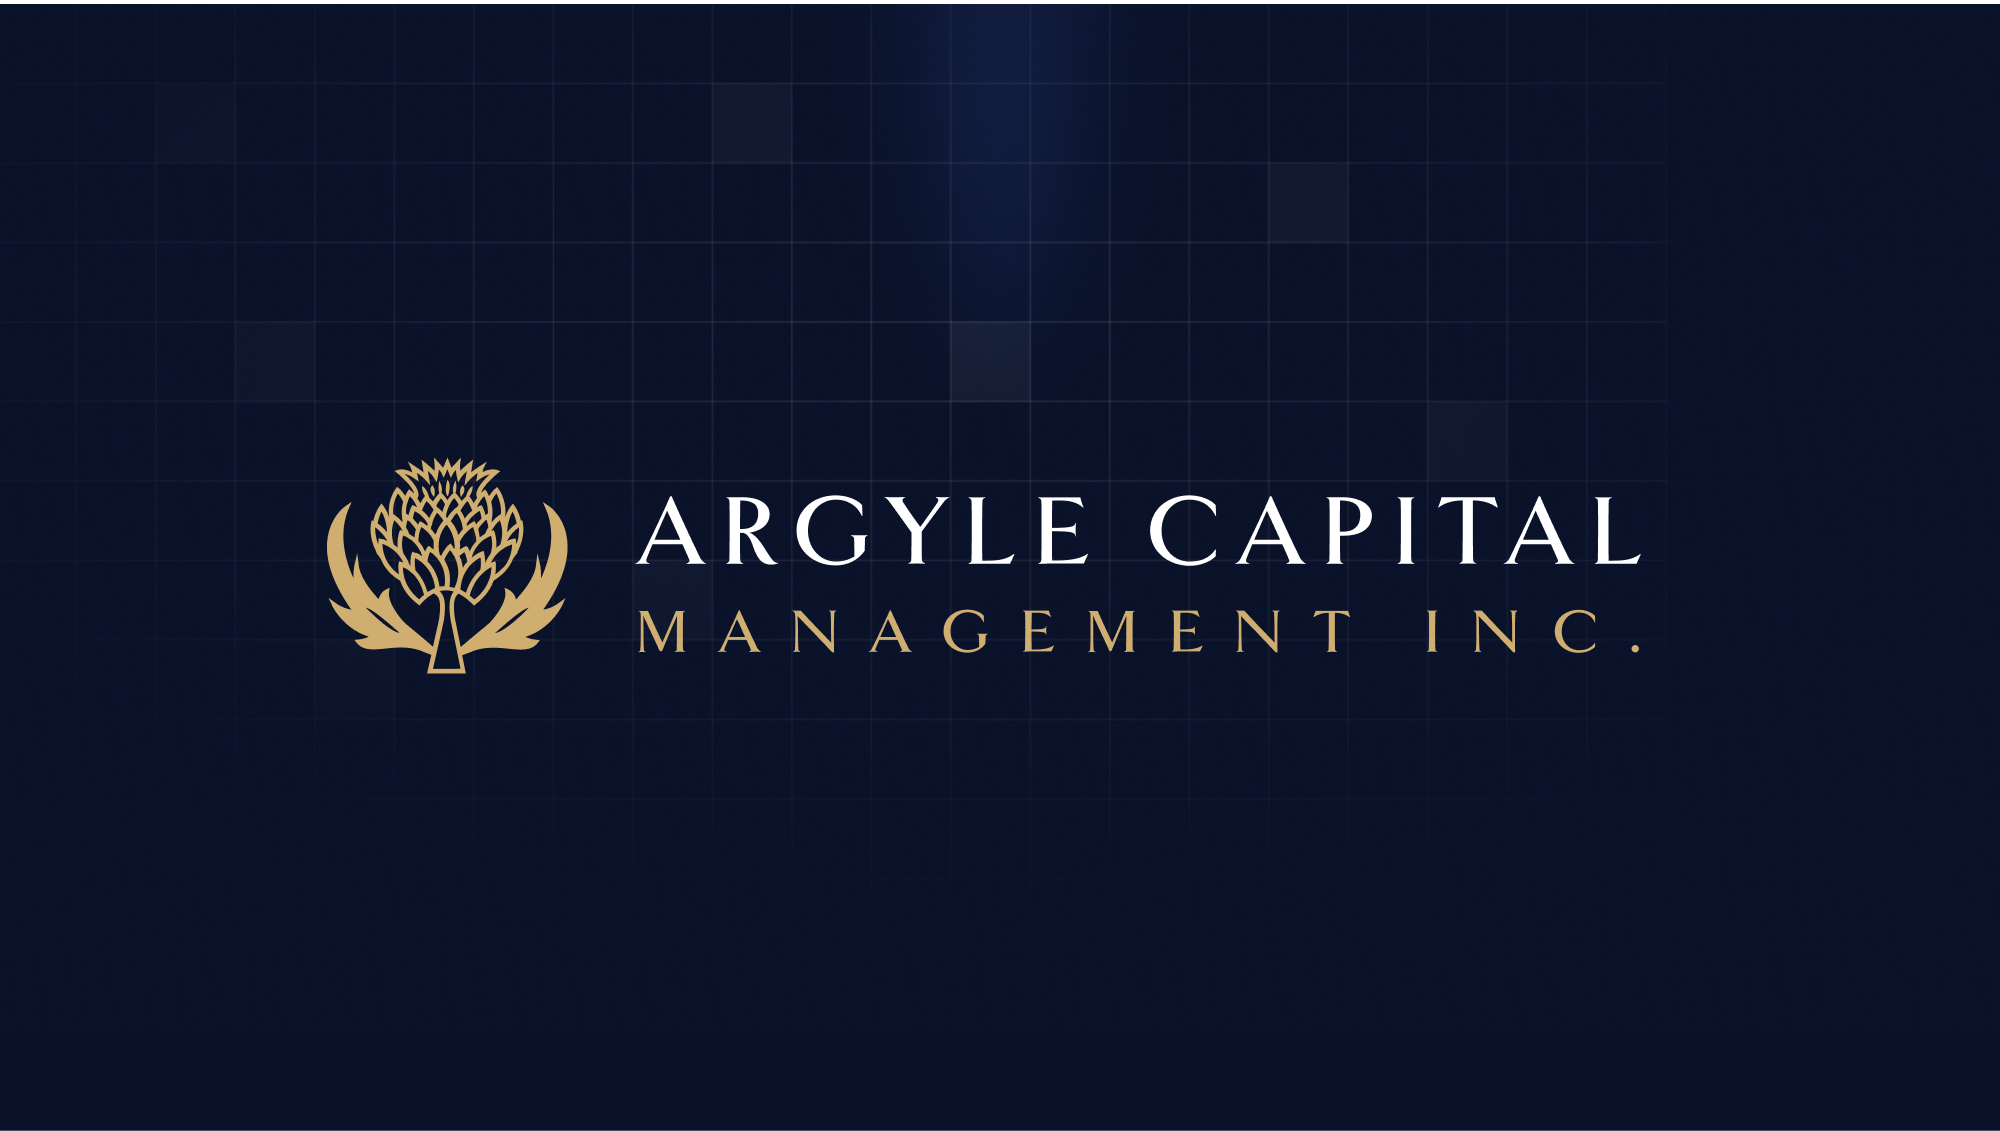 Argyle Capital Management branding logo